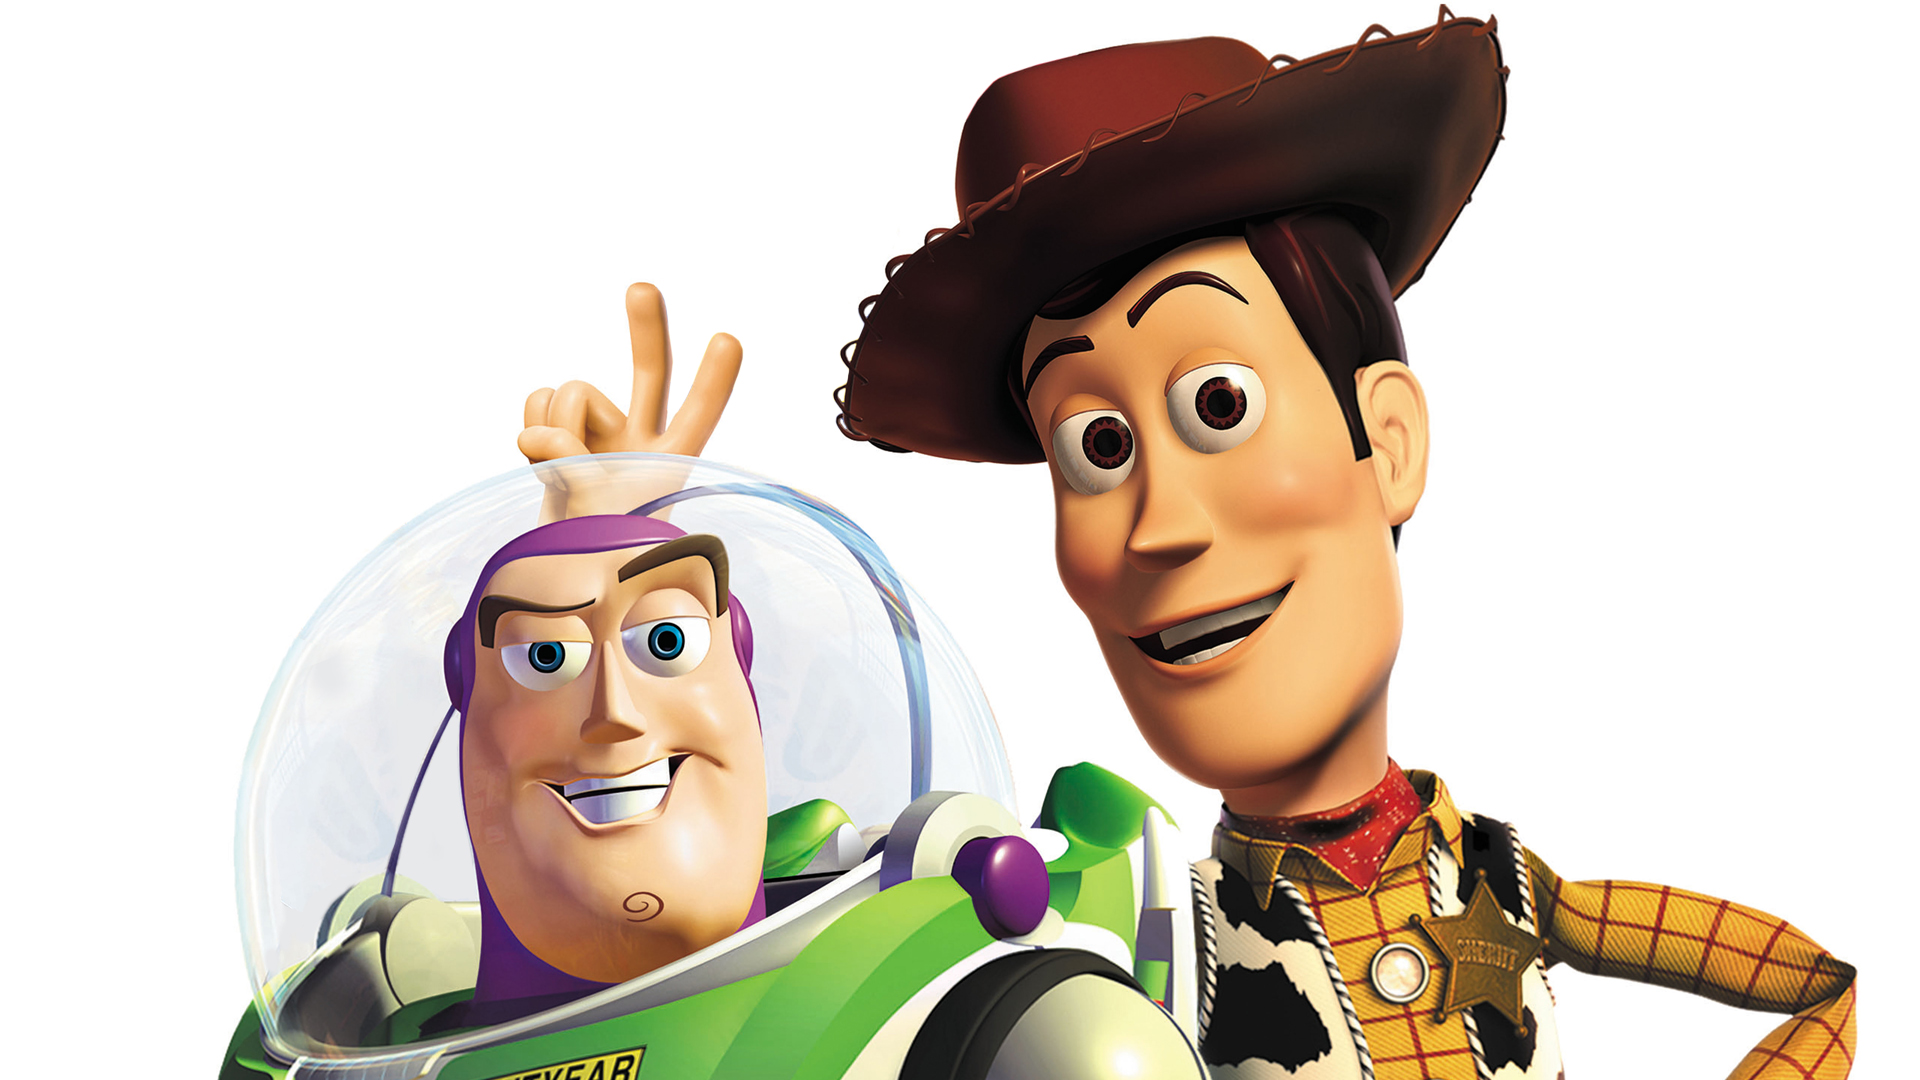 Buzz Lightyear Woody Toy Story Wallpaper - Resolution:1920x1080 - ID:883262...